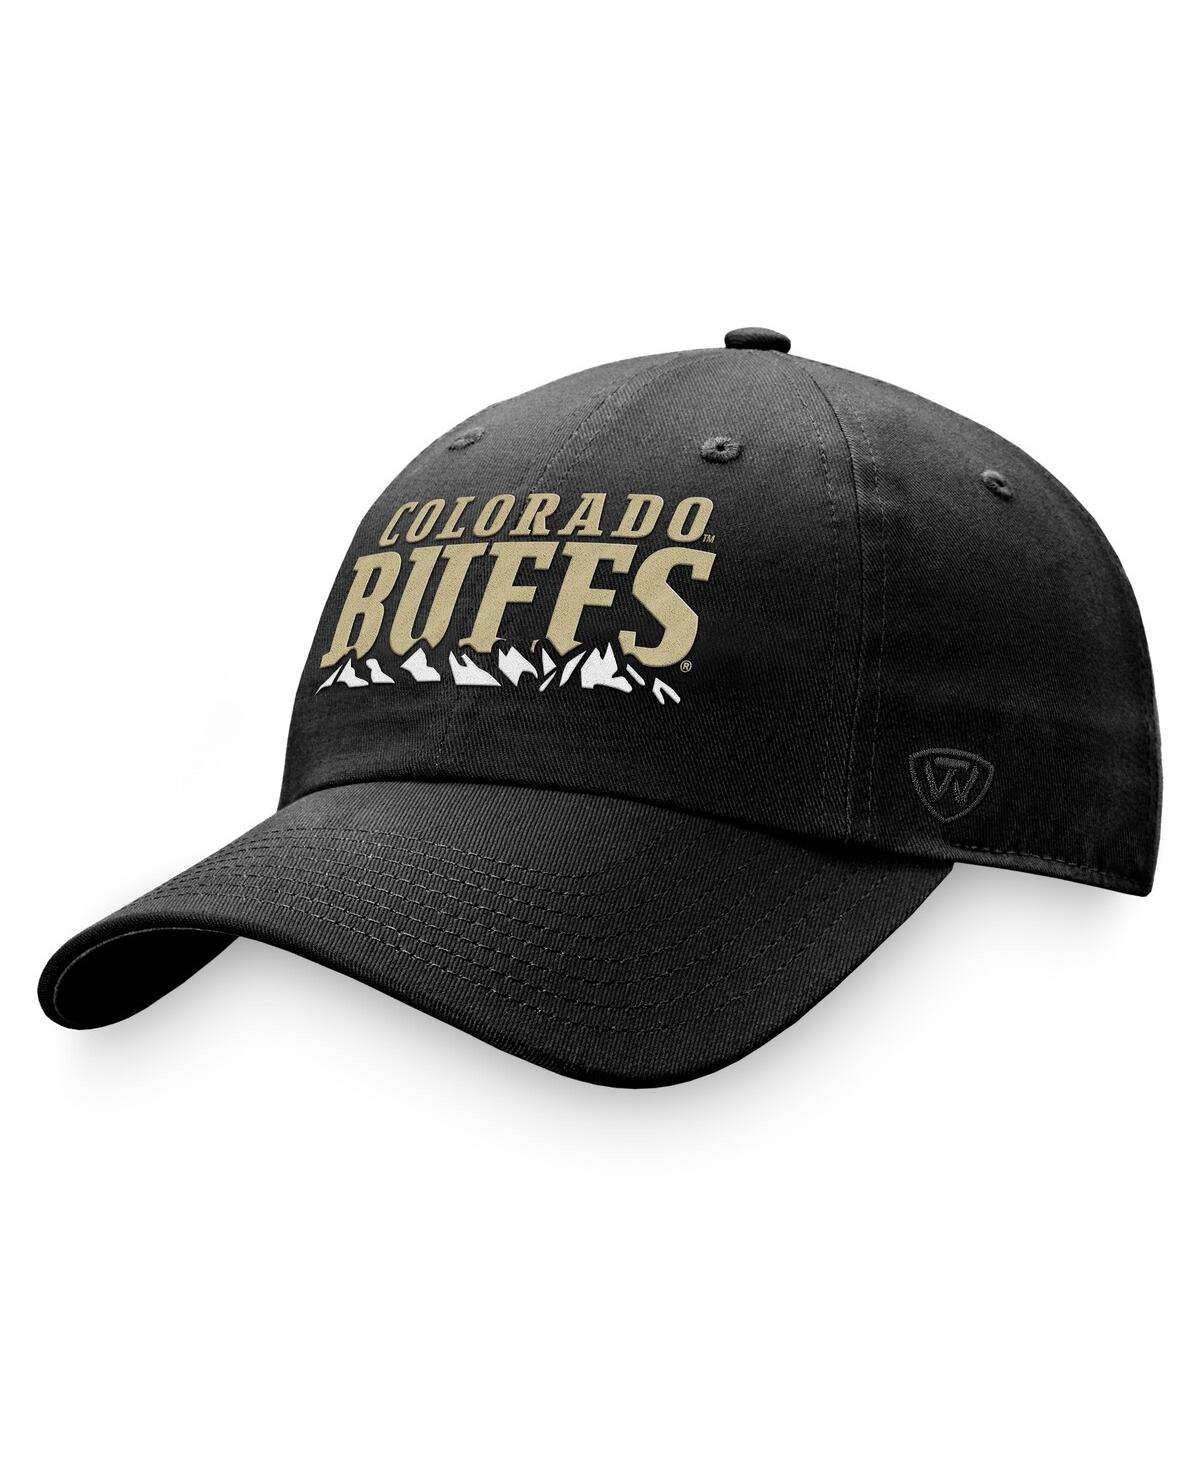 Men's Top of the World Black Colorado Buffaloes Adjustable Hat - Black